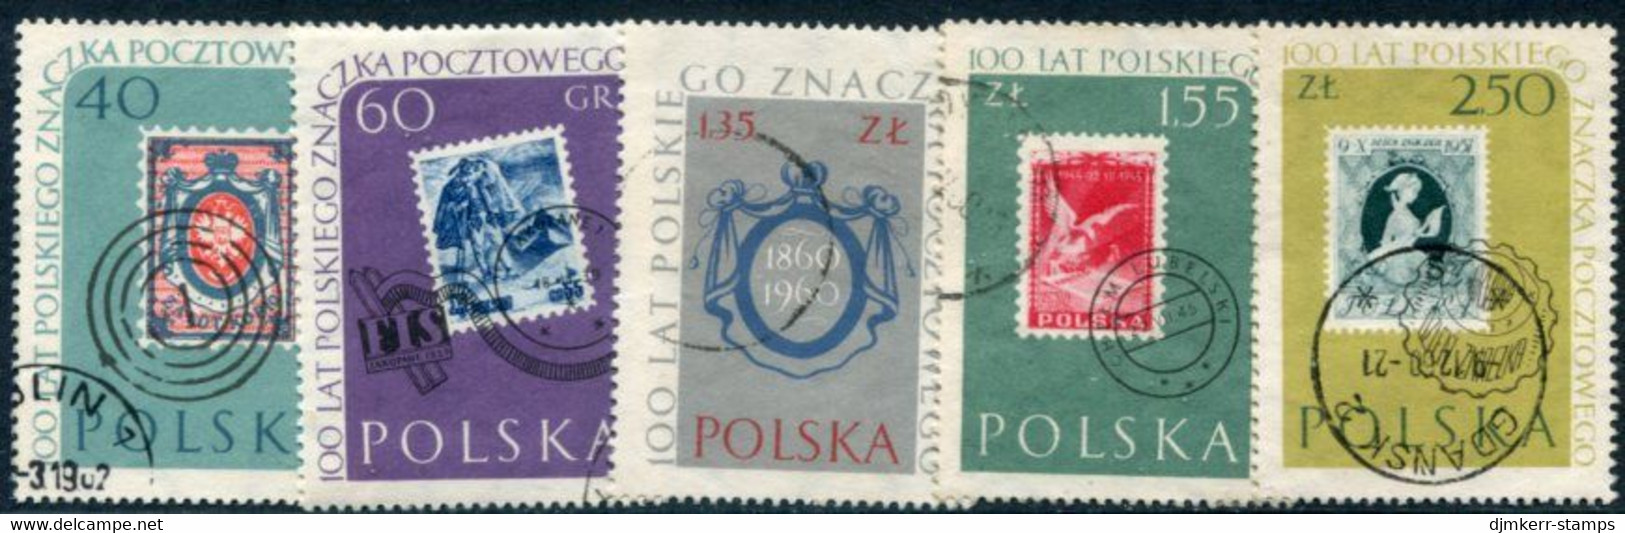 POLAND 1960 Stamp Centenary Set Used.  Michel 1151-55 - Usati